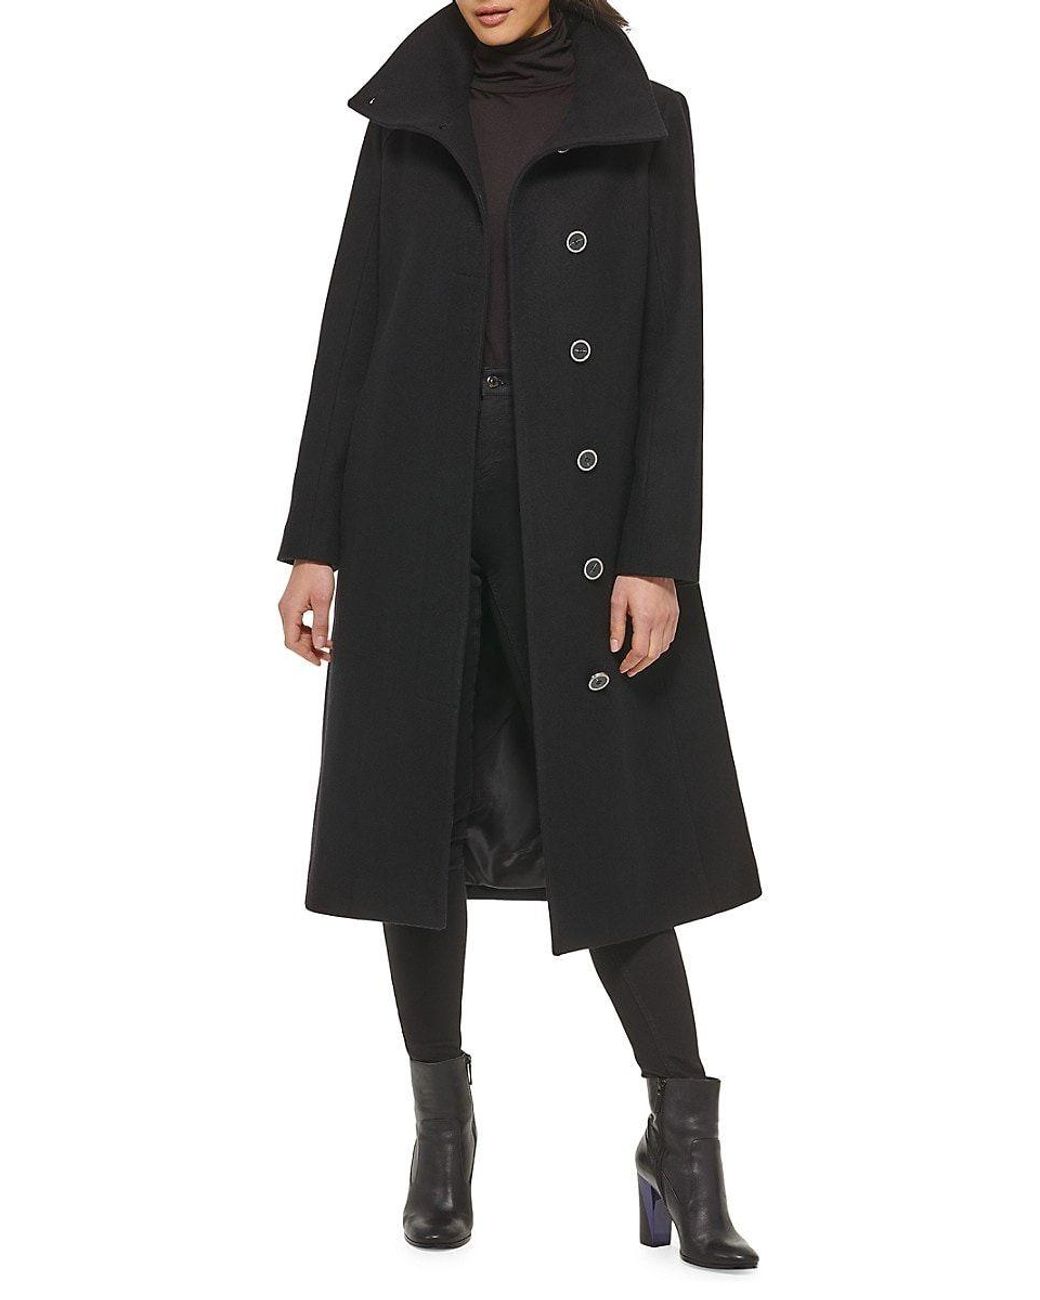 Kenneth Cole Wool Blend Coat in Black | Lyst